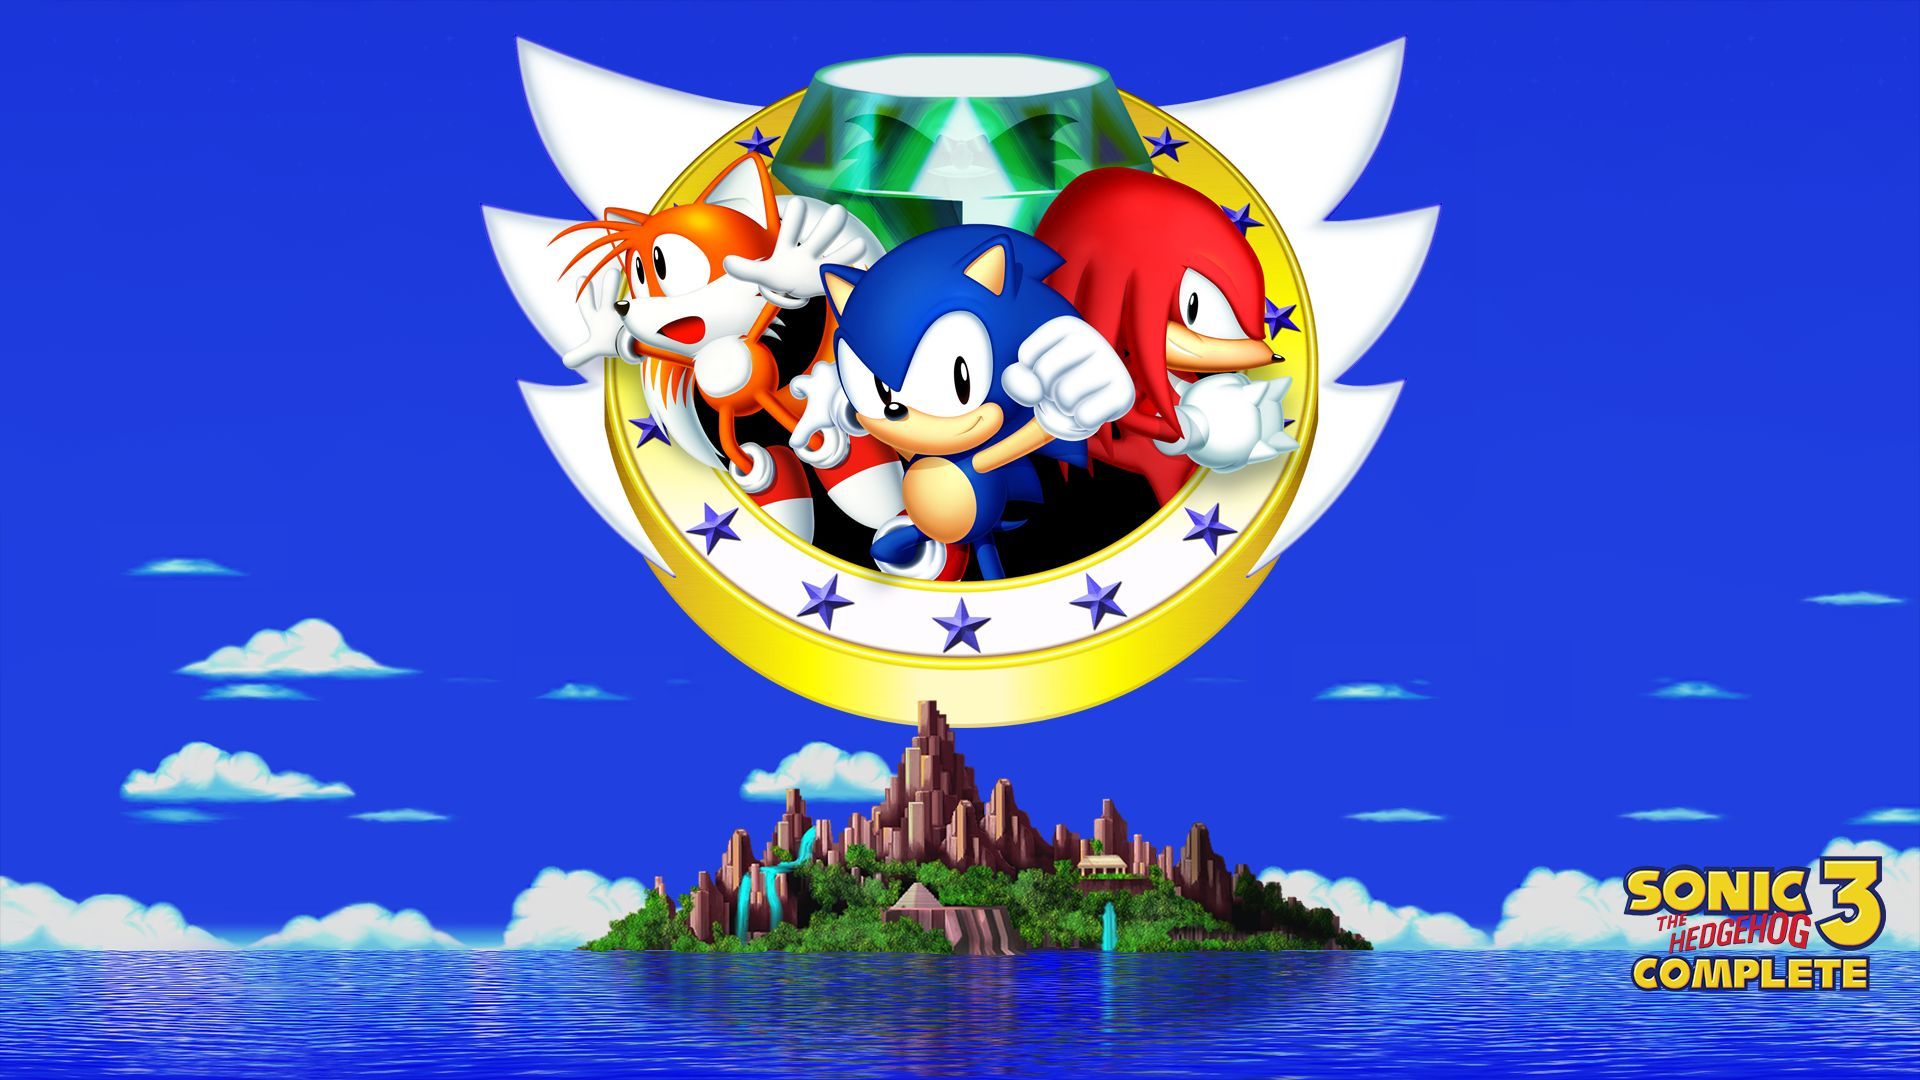 Sonic the Hedgehog 3 Wallpaper. Mario